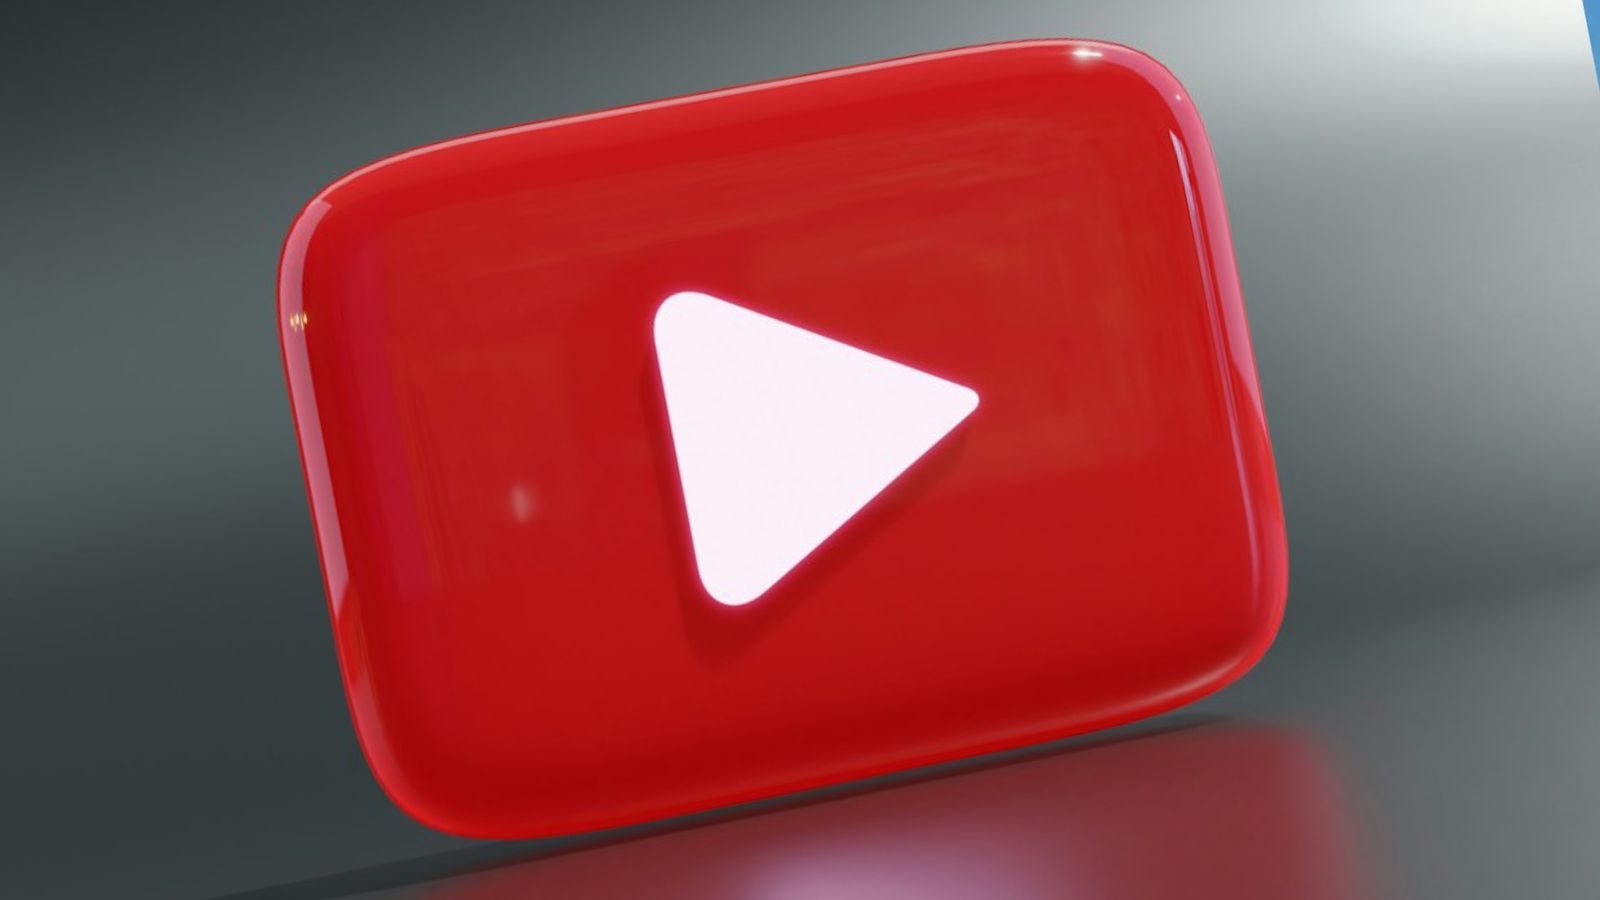 A 3D YouTube logo